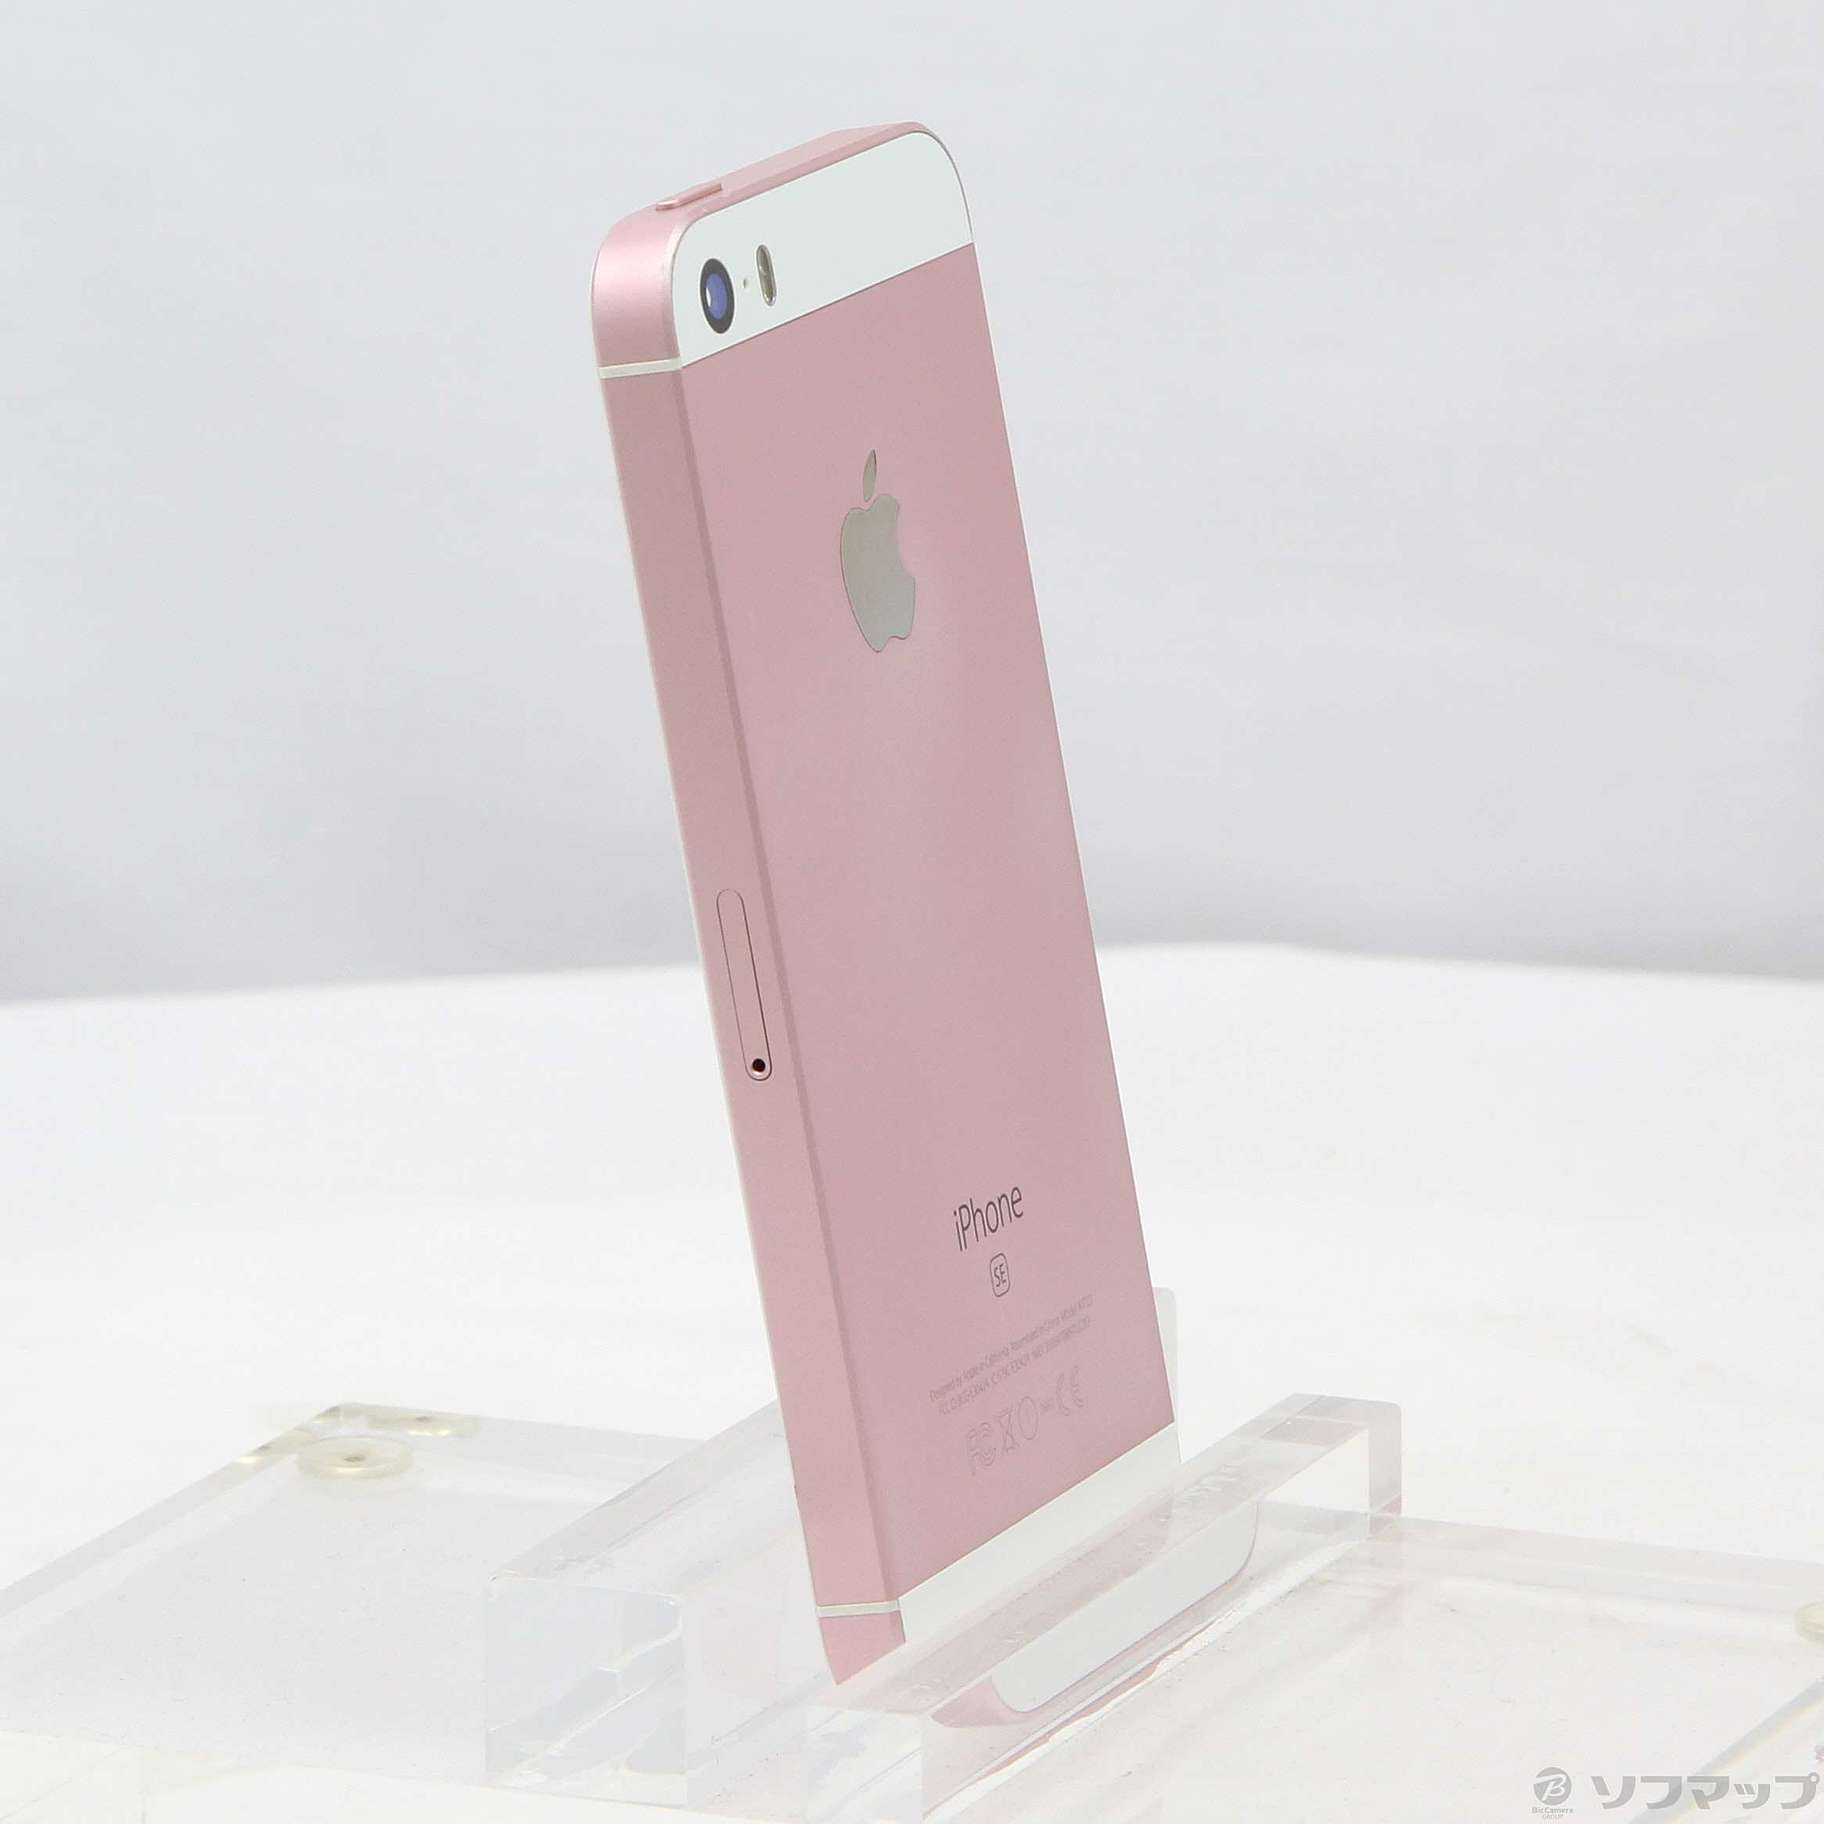 iPhoneSE 32GB ローズゴールド - スマートフォン本体